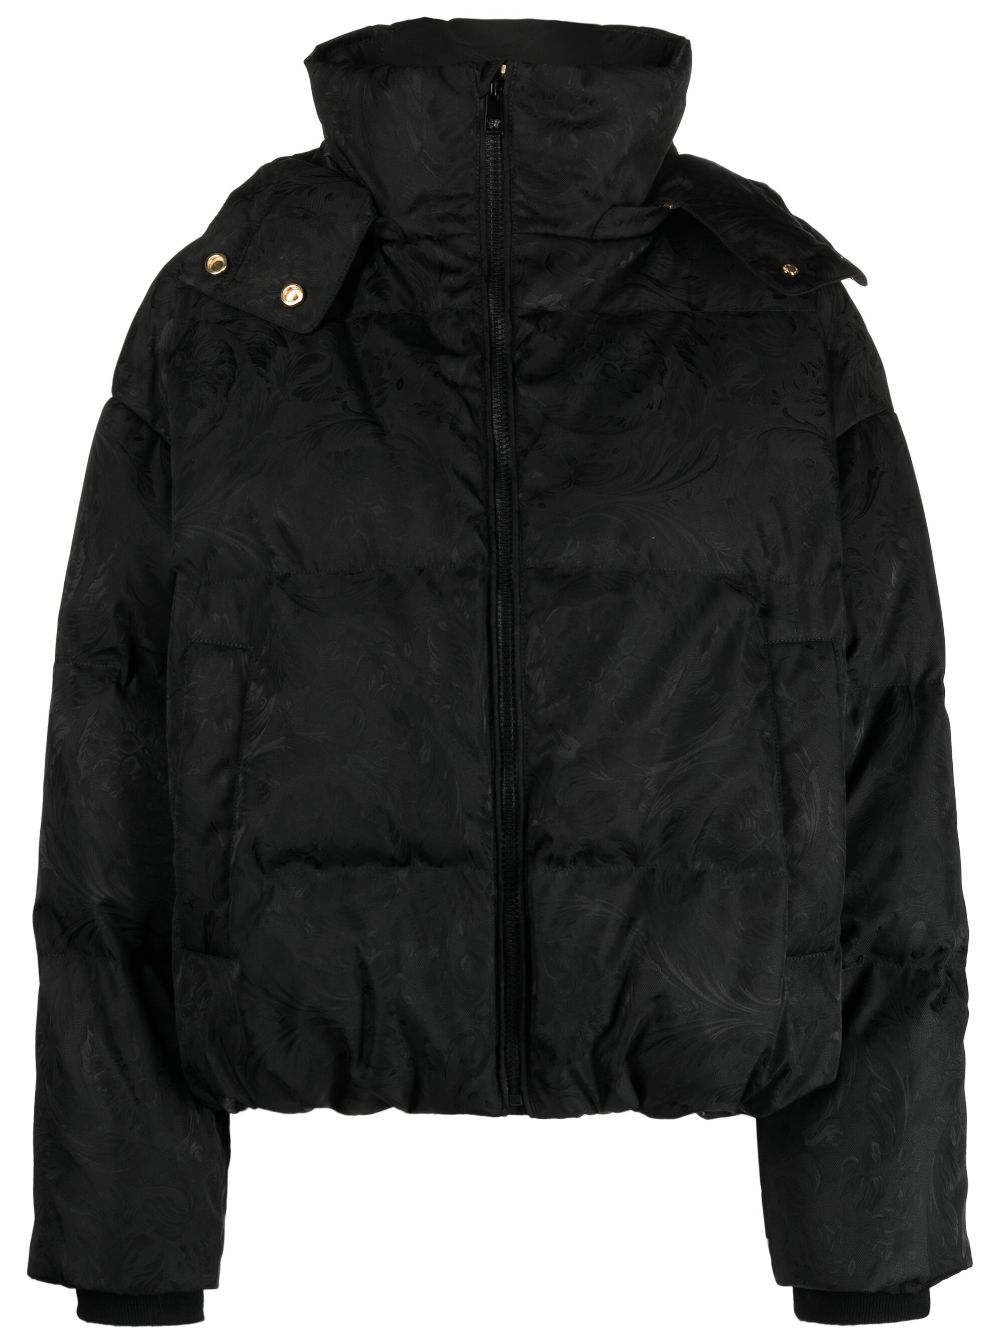 Barocco Silhouette jacquard puffer jacket